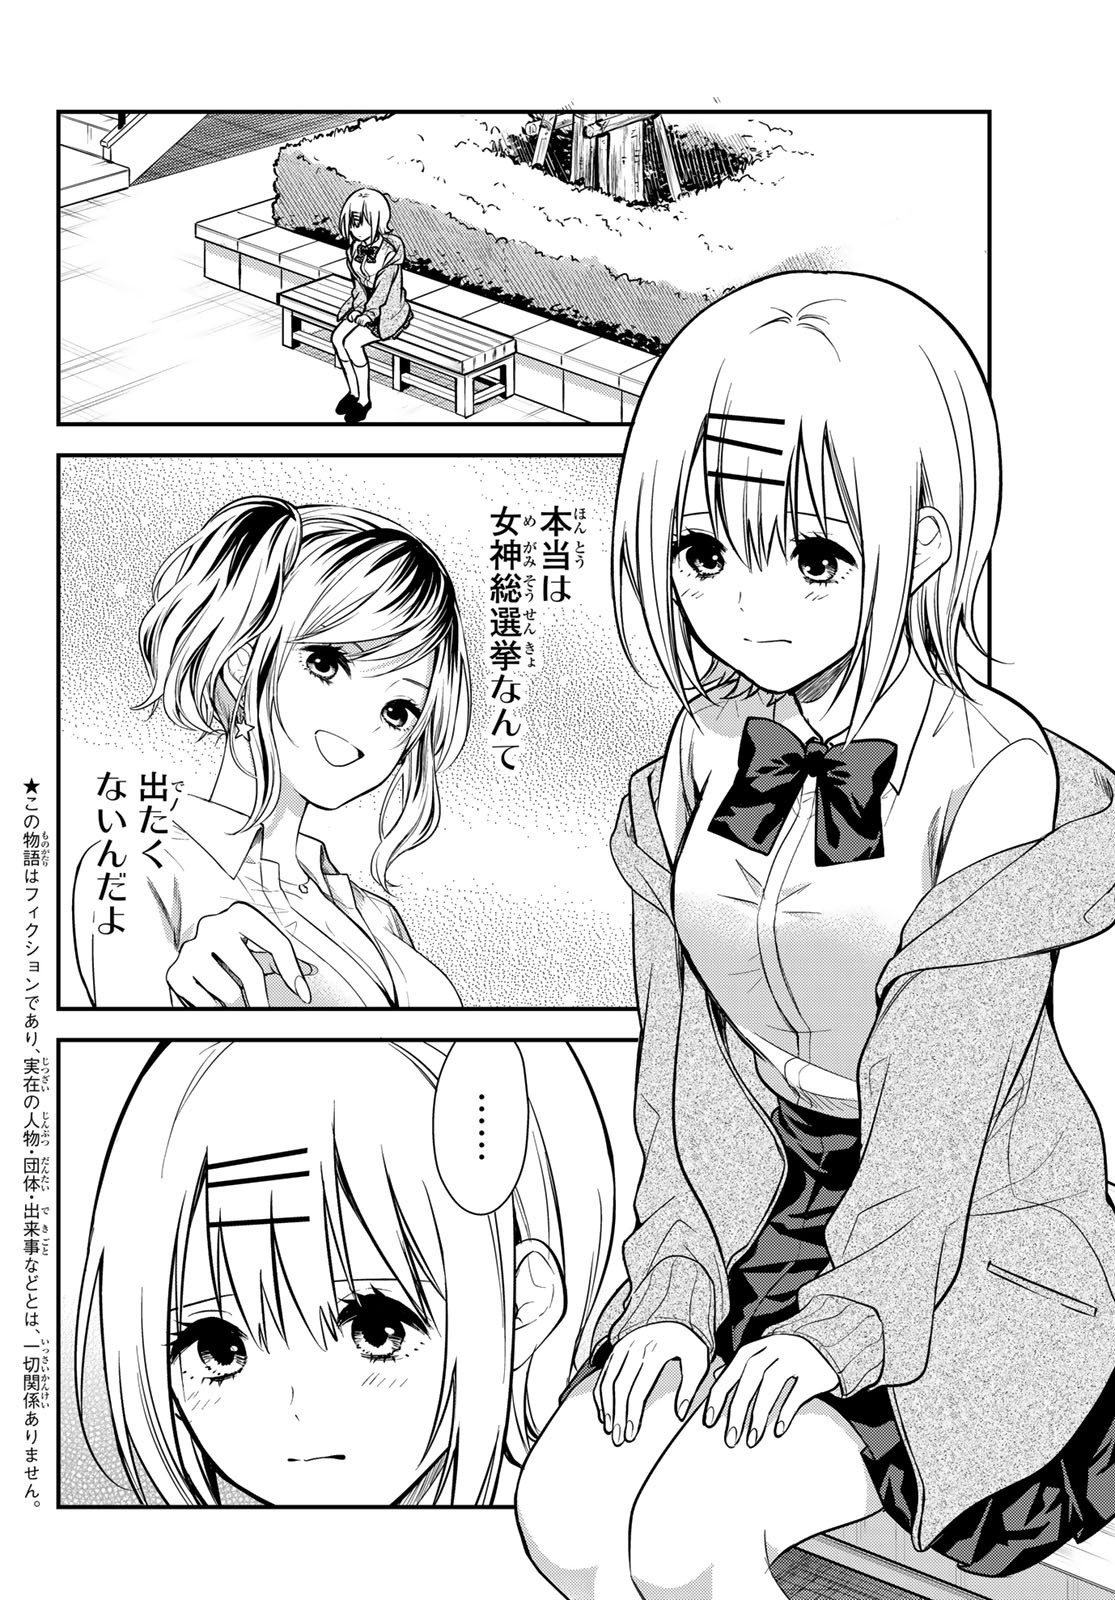 Kimi ga Megami Nara Ii no ni (I Wish You Were My Muse) - Chapter 009 - Page 2